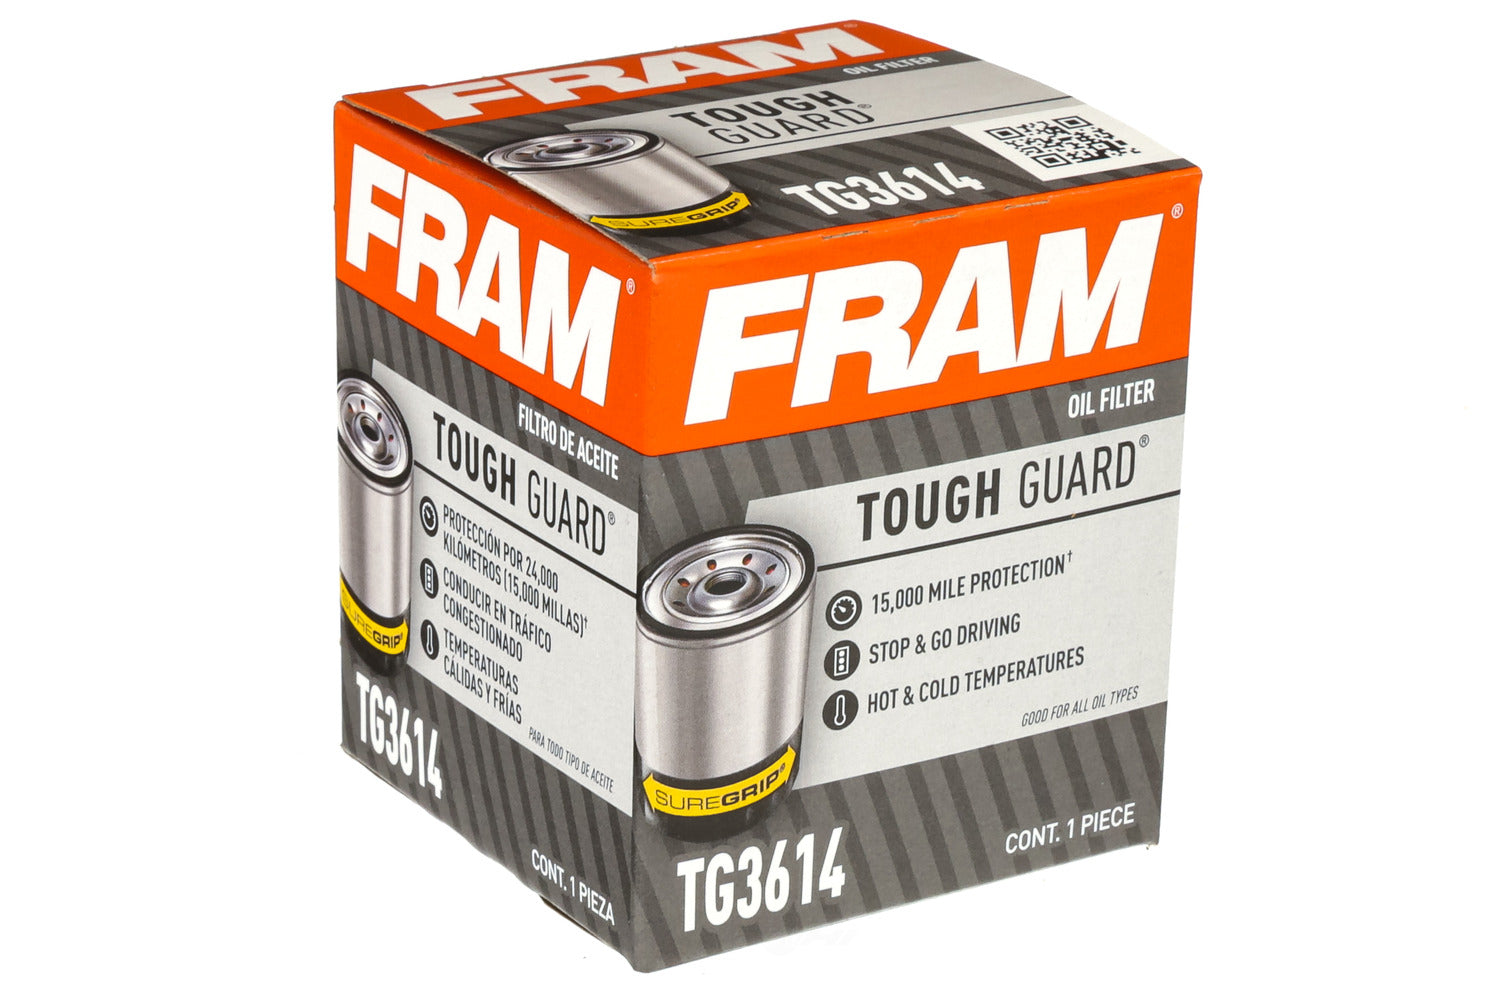 TG3614 FRAM Tough Guard Oil Filter